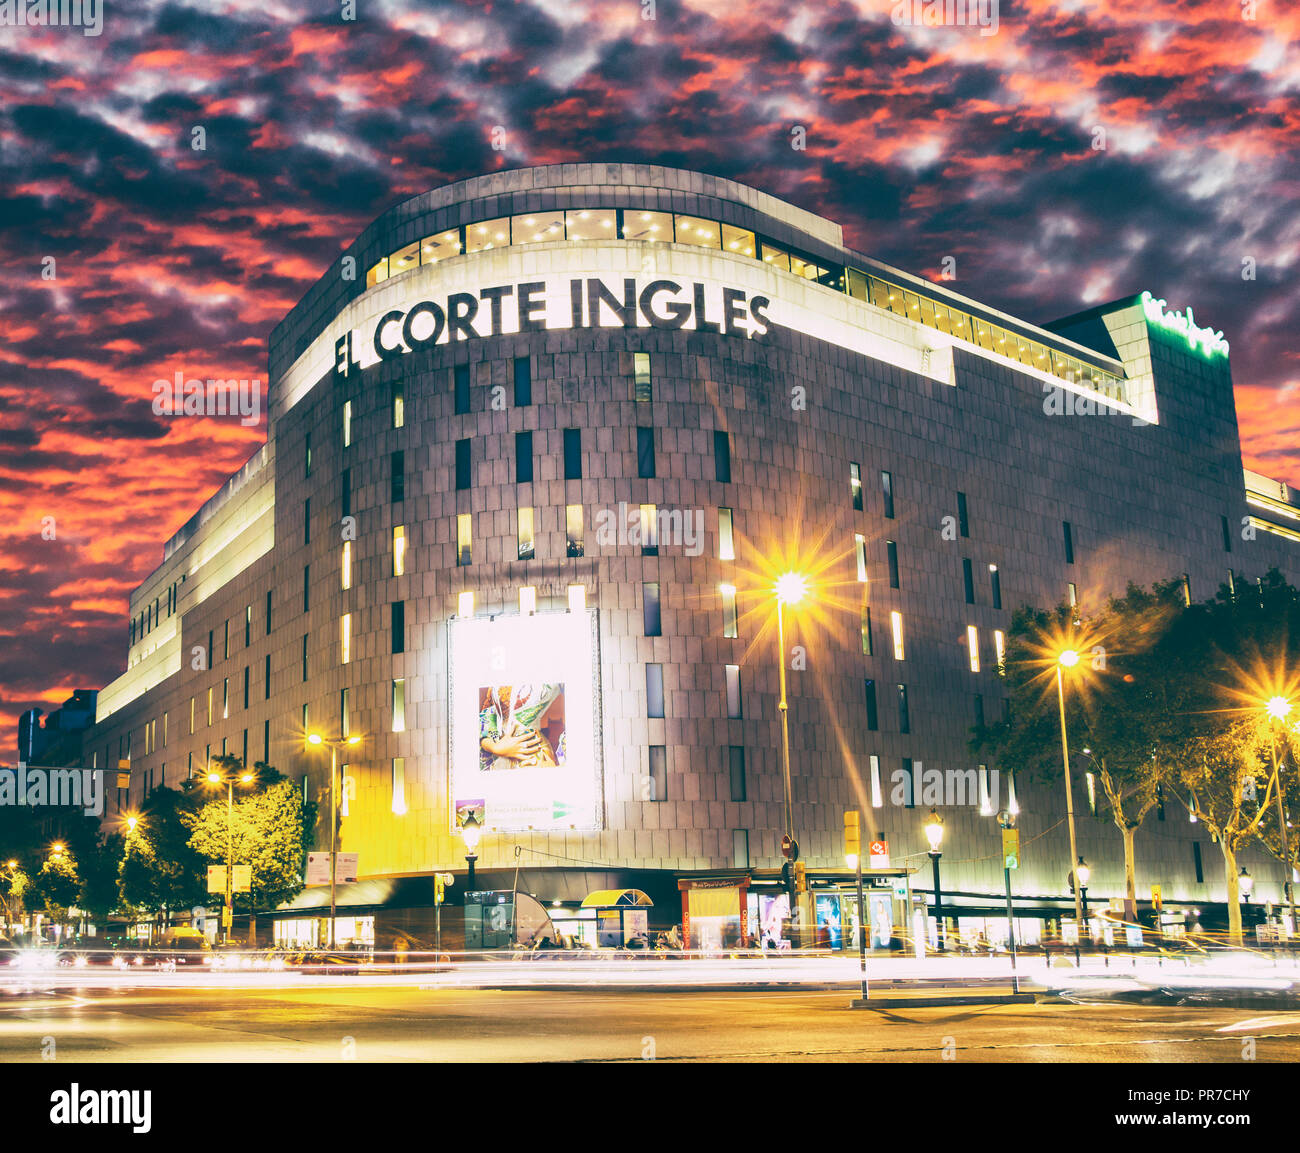 El Corte Ingles department store in Barcelona, Spain Stock Photo